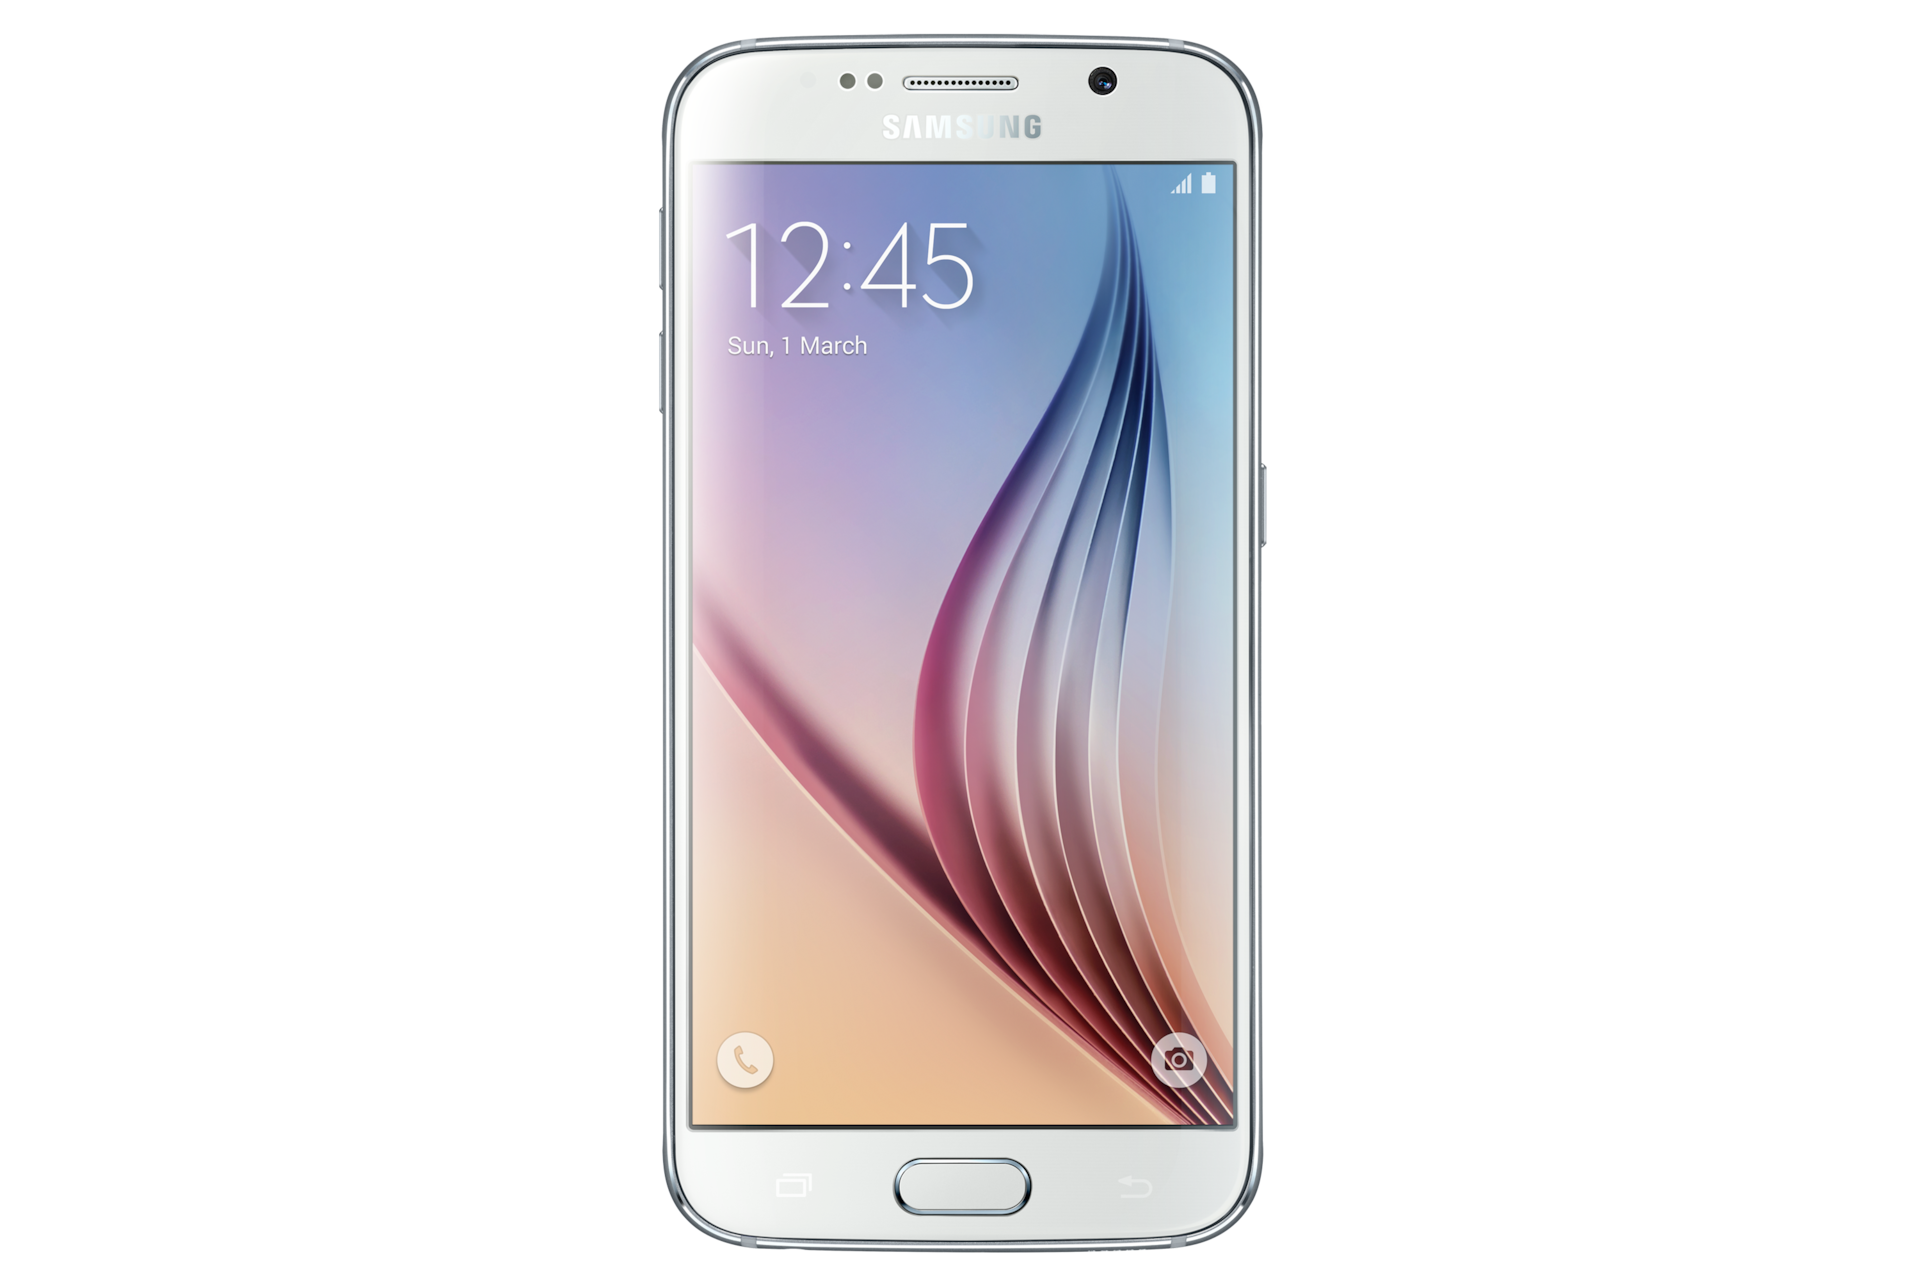 Samsung Galaxy S6 White 32gb View Full Specs Samsung Uk